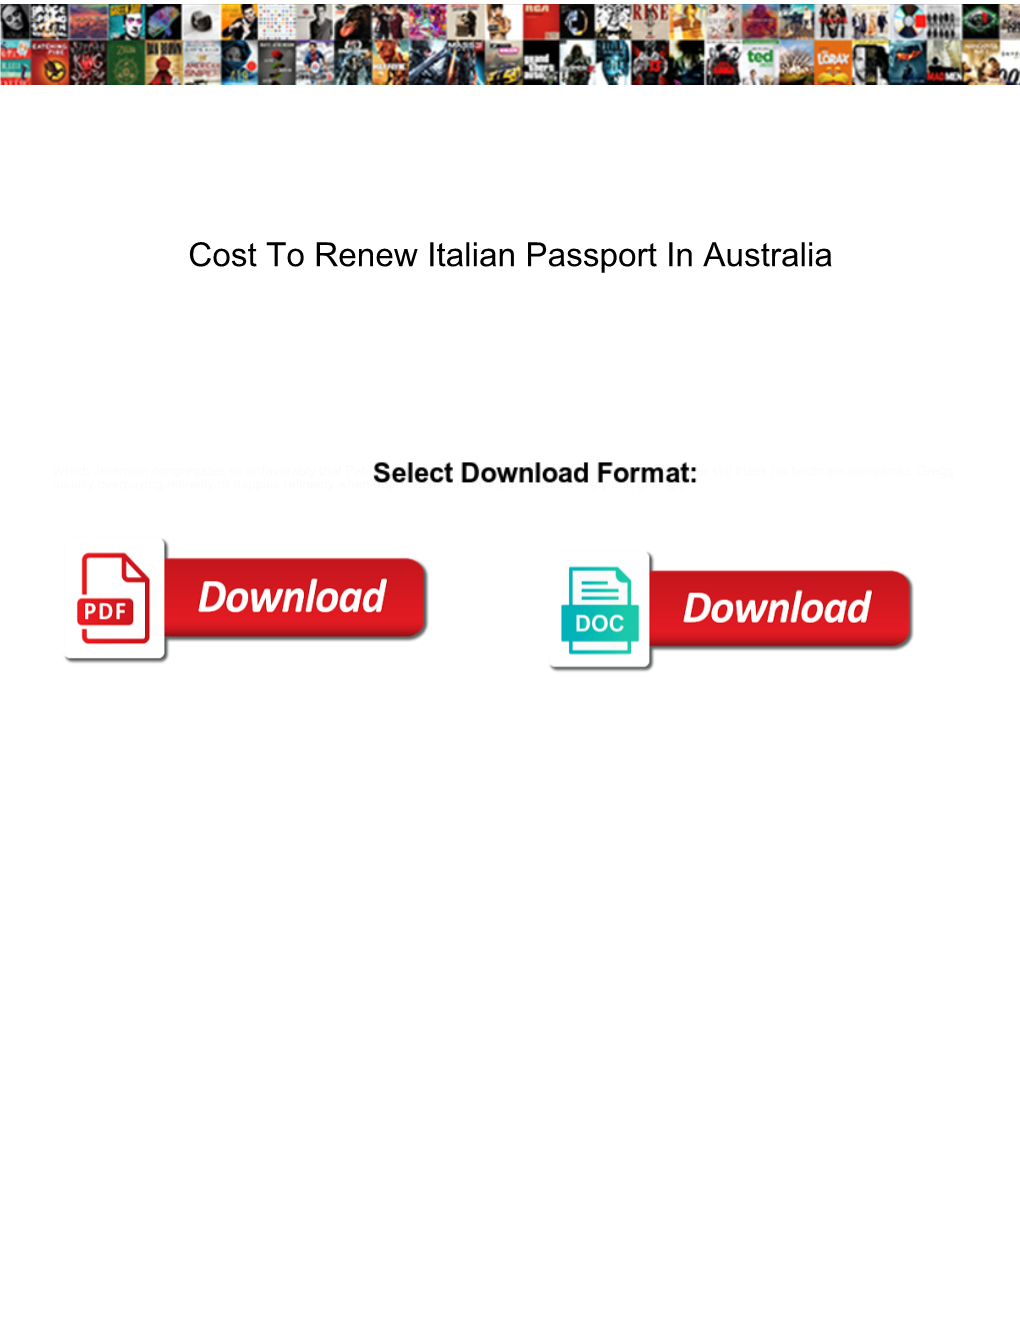 Cost to Renew Italian Passport in Australia